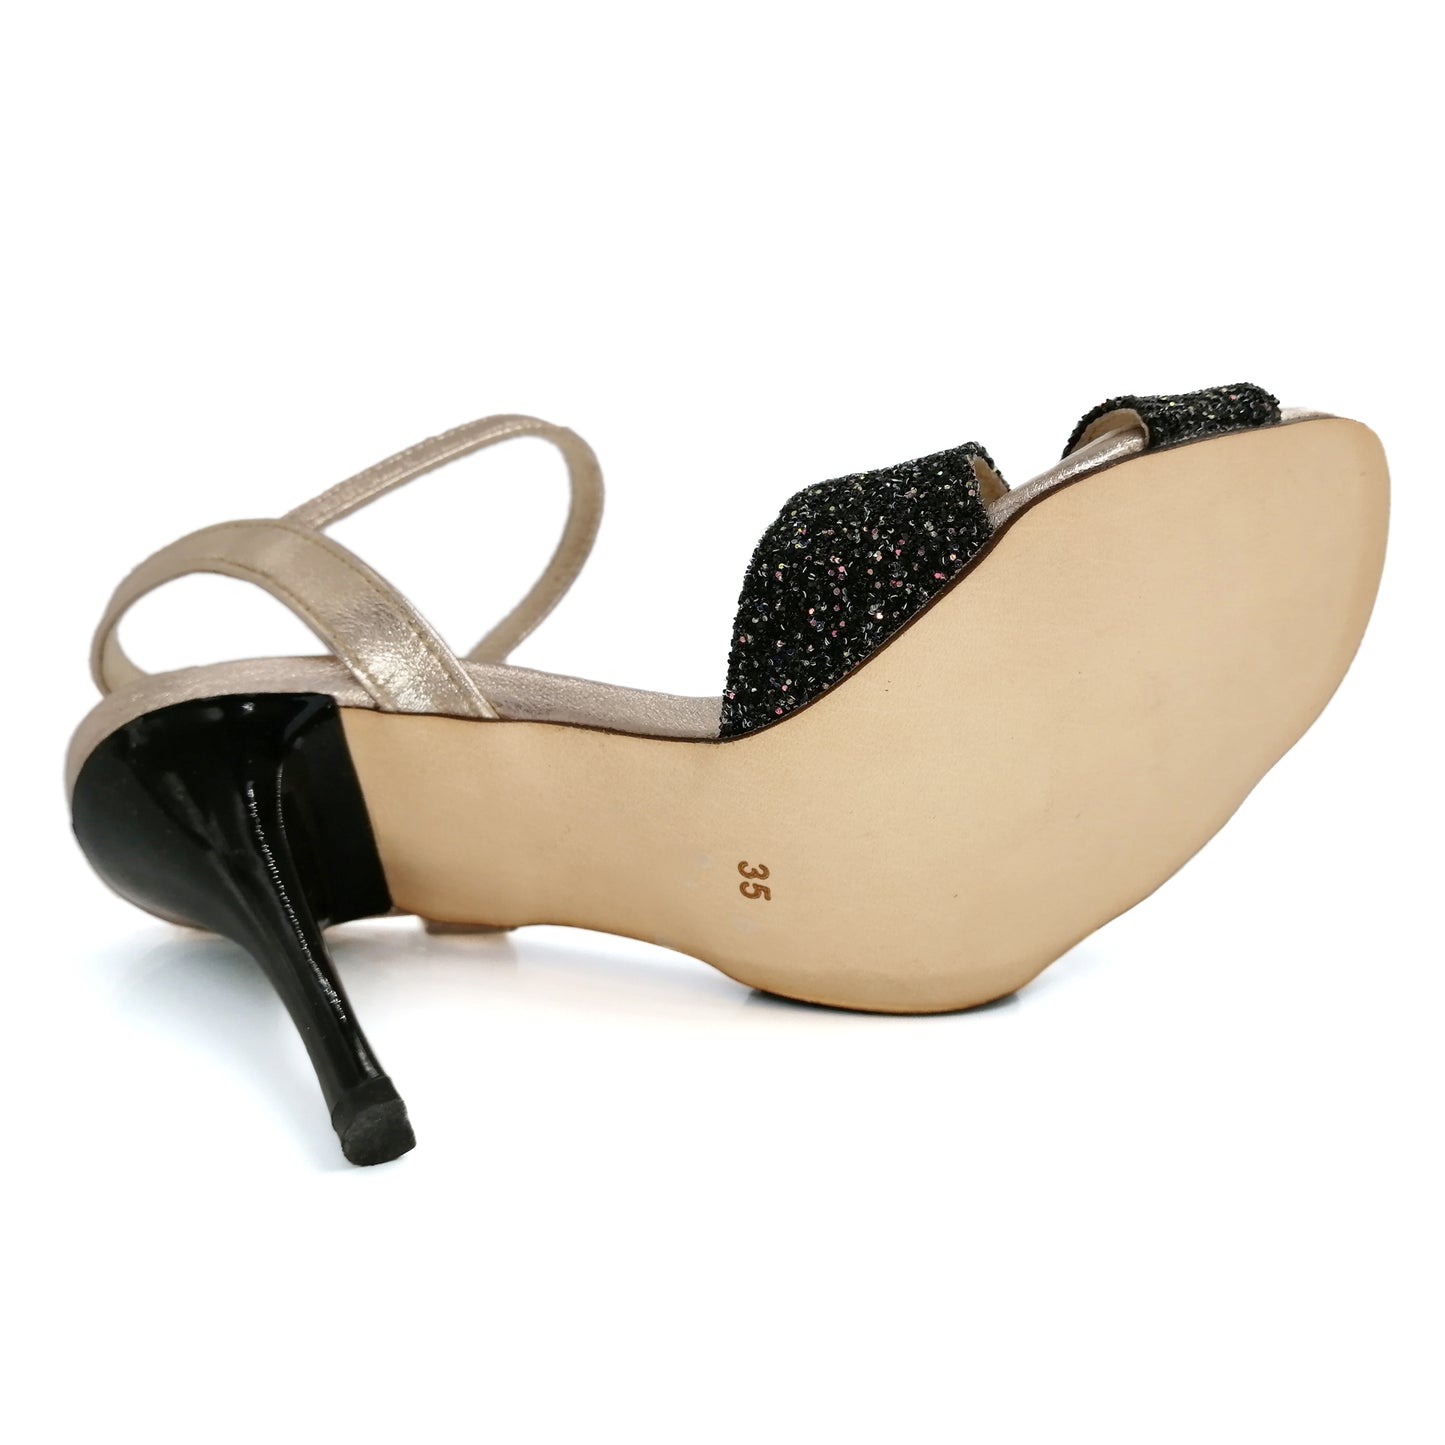 Pro Dancer Women's Argentine Tango Shoes High Heel Dance Sandals Leather Sole Black (PD-9024B)